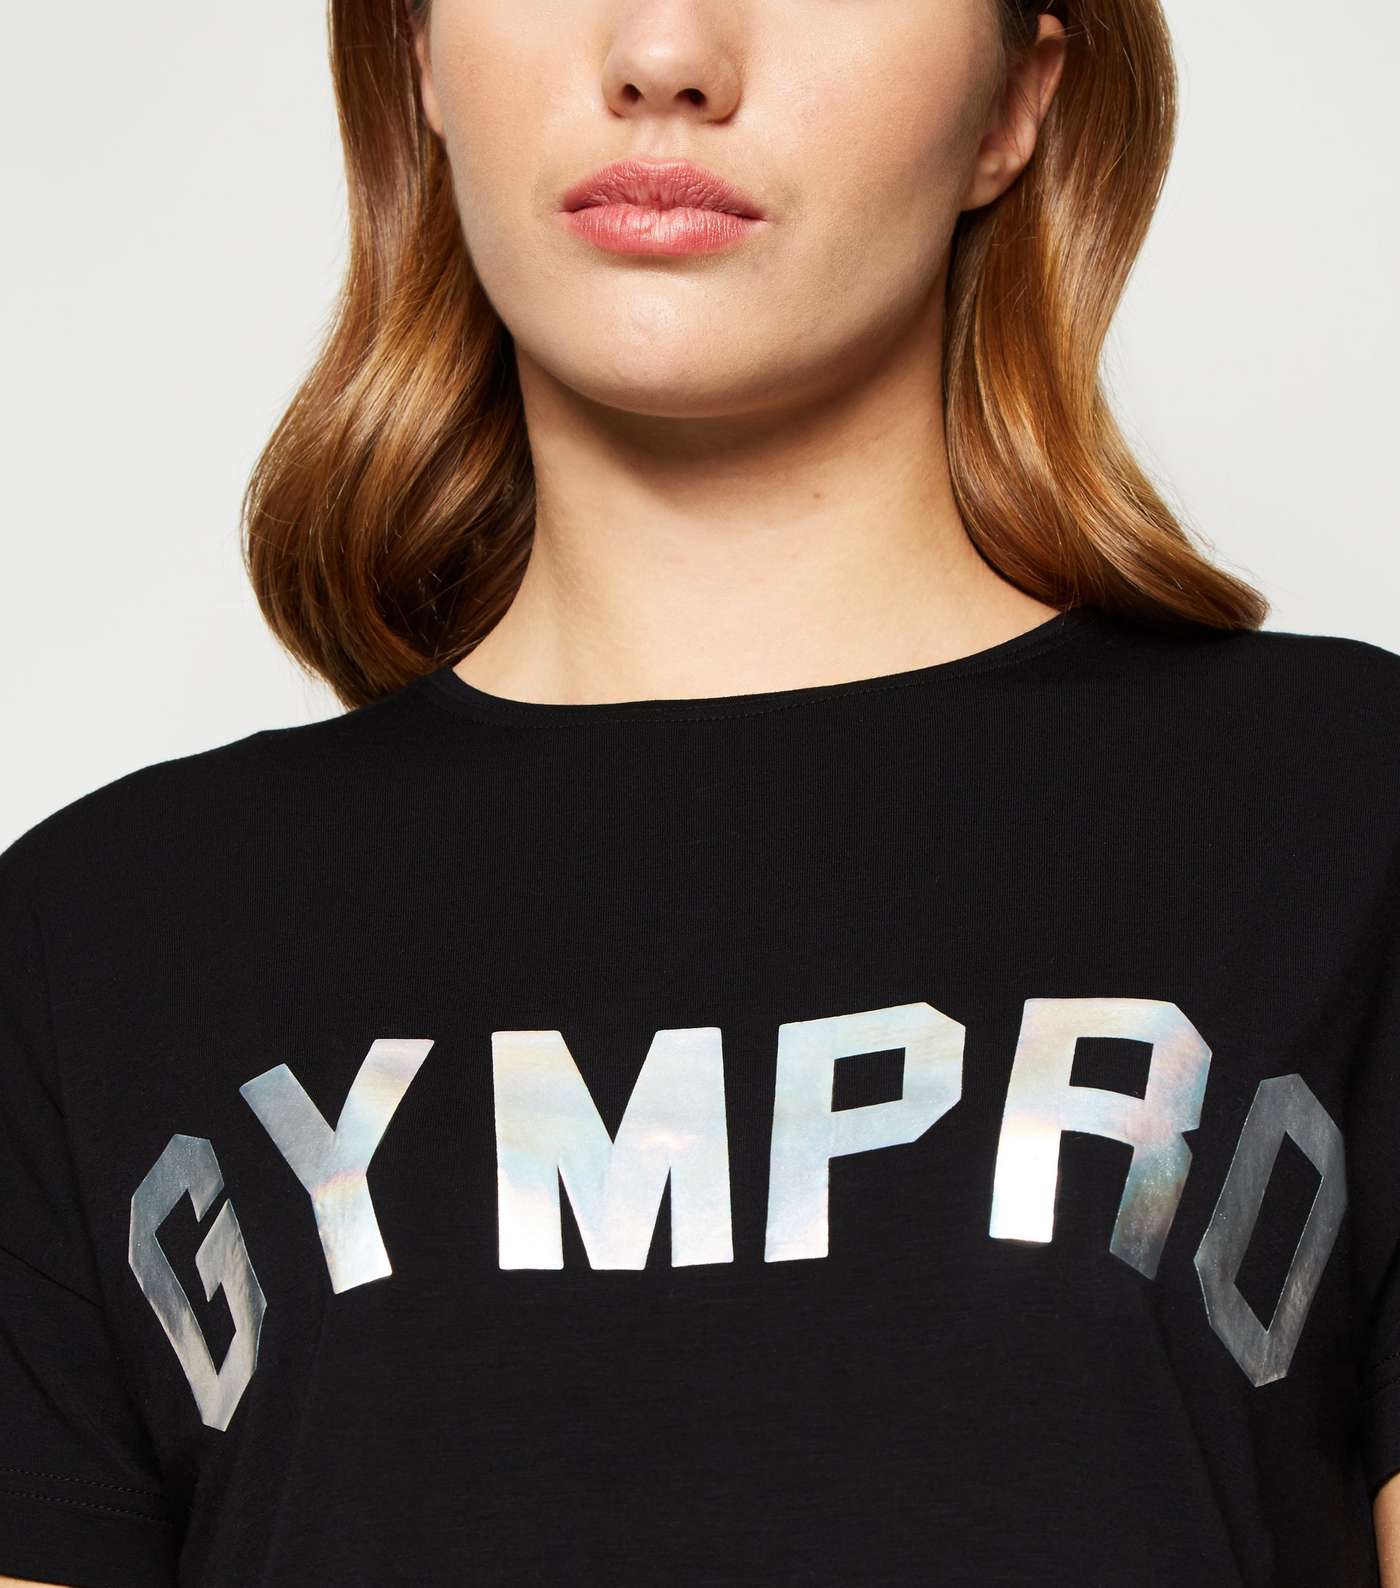 GymPro Black Cropped Slogan T-Shirt Image 5